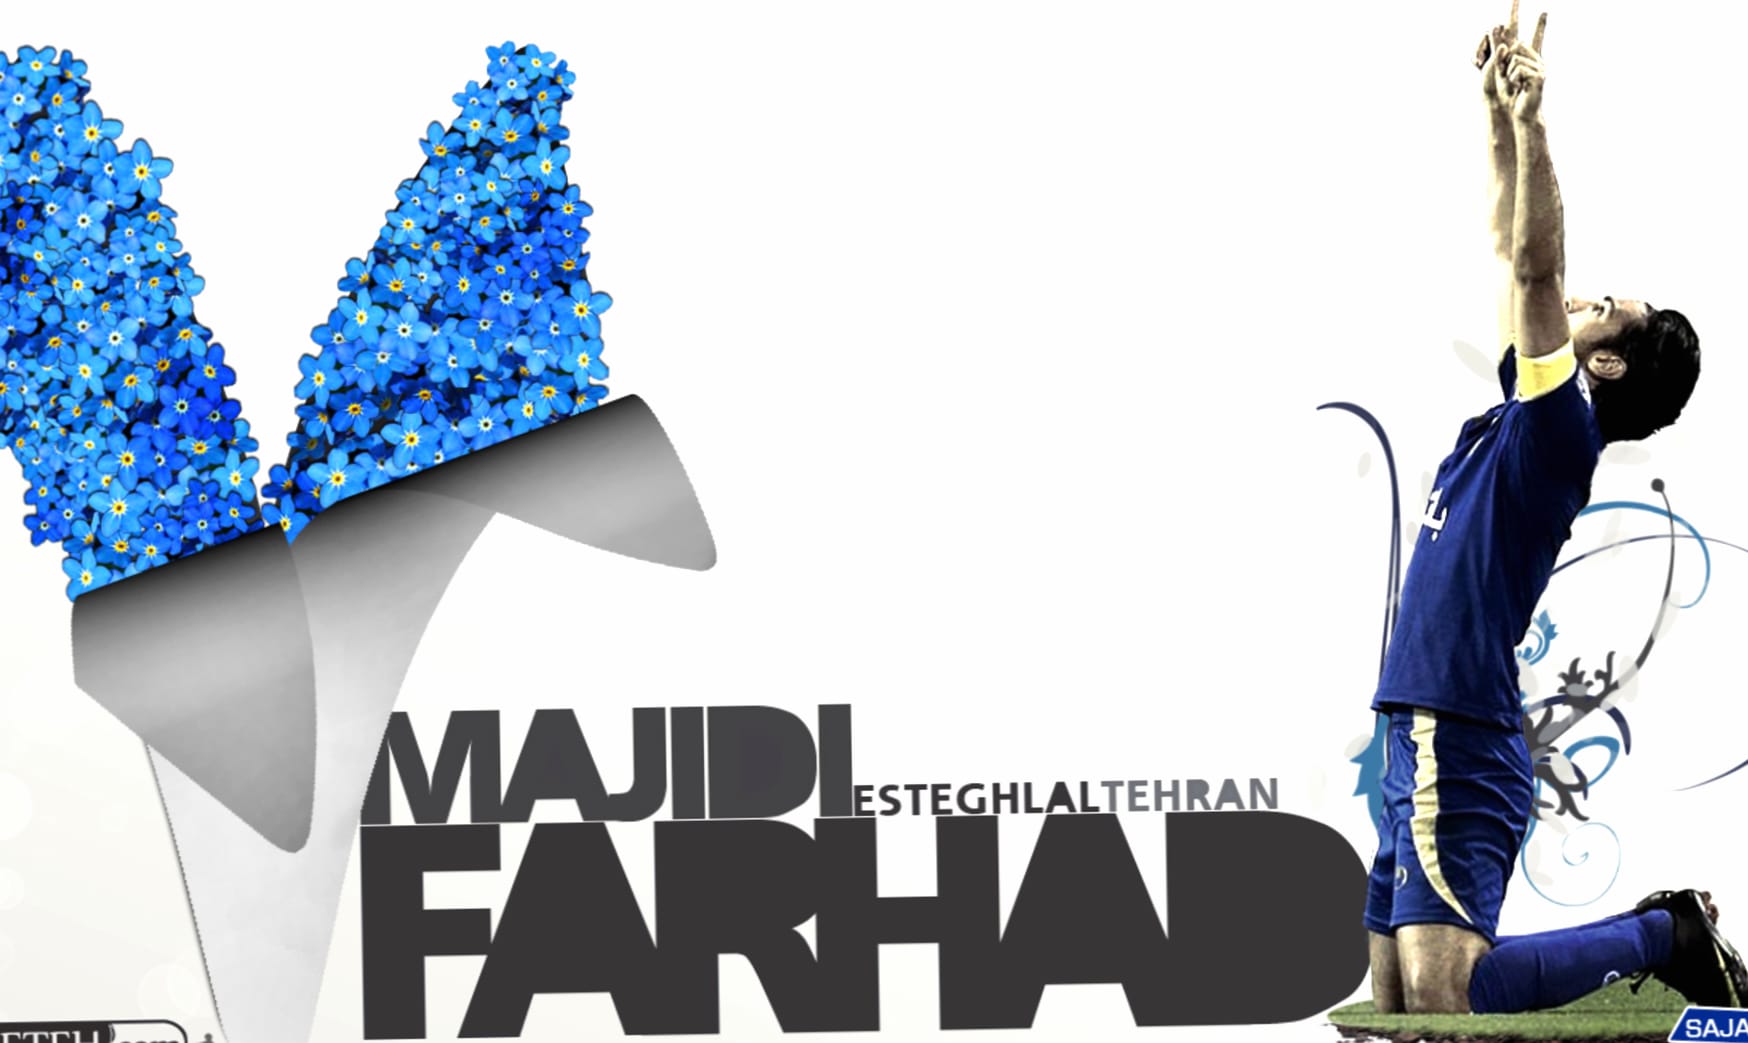 Farhad Majidi at 640 x 1136 iPhone 5 size wallpapers HD quality